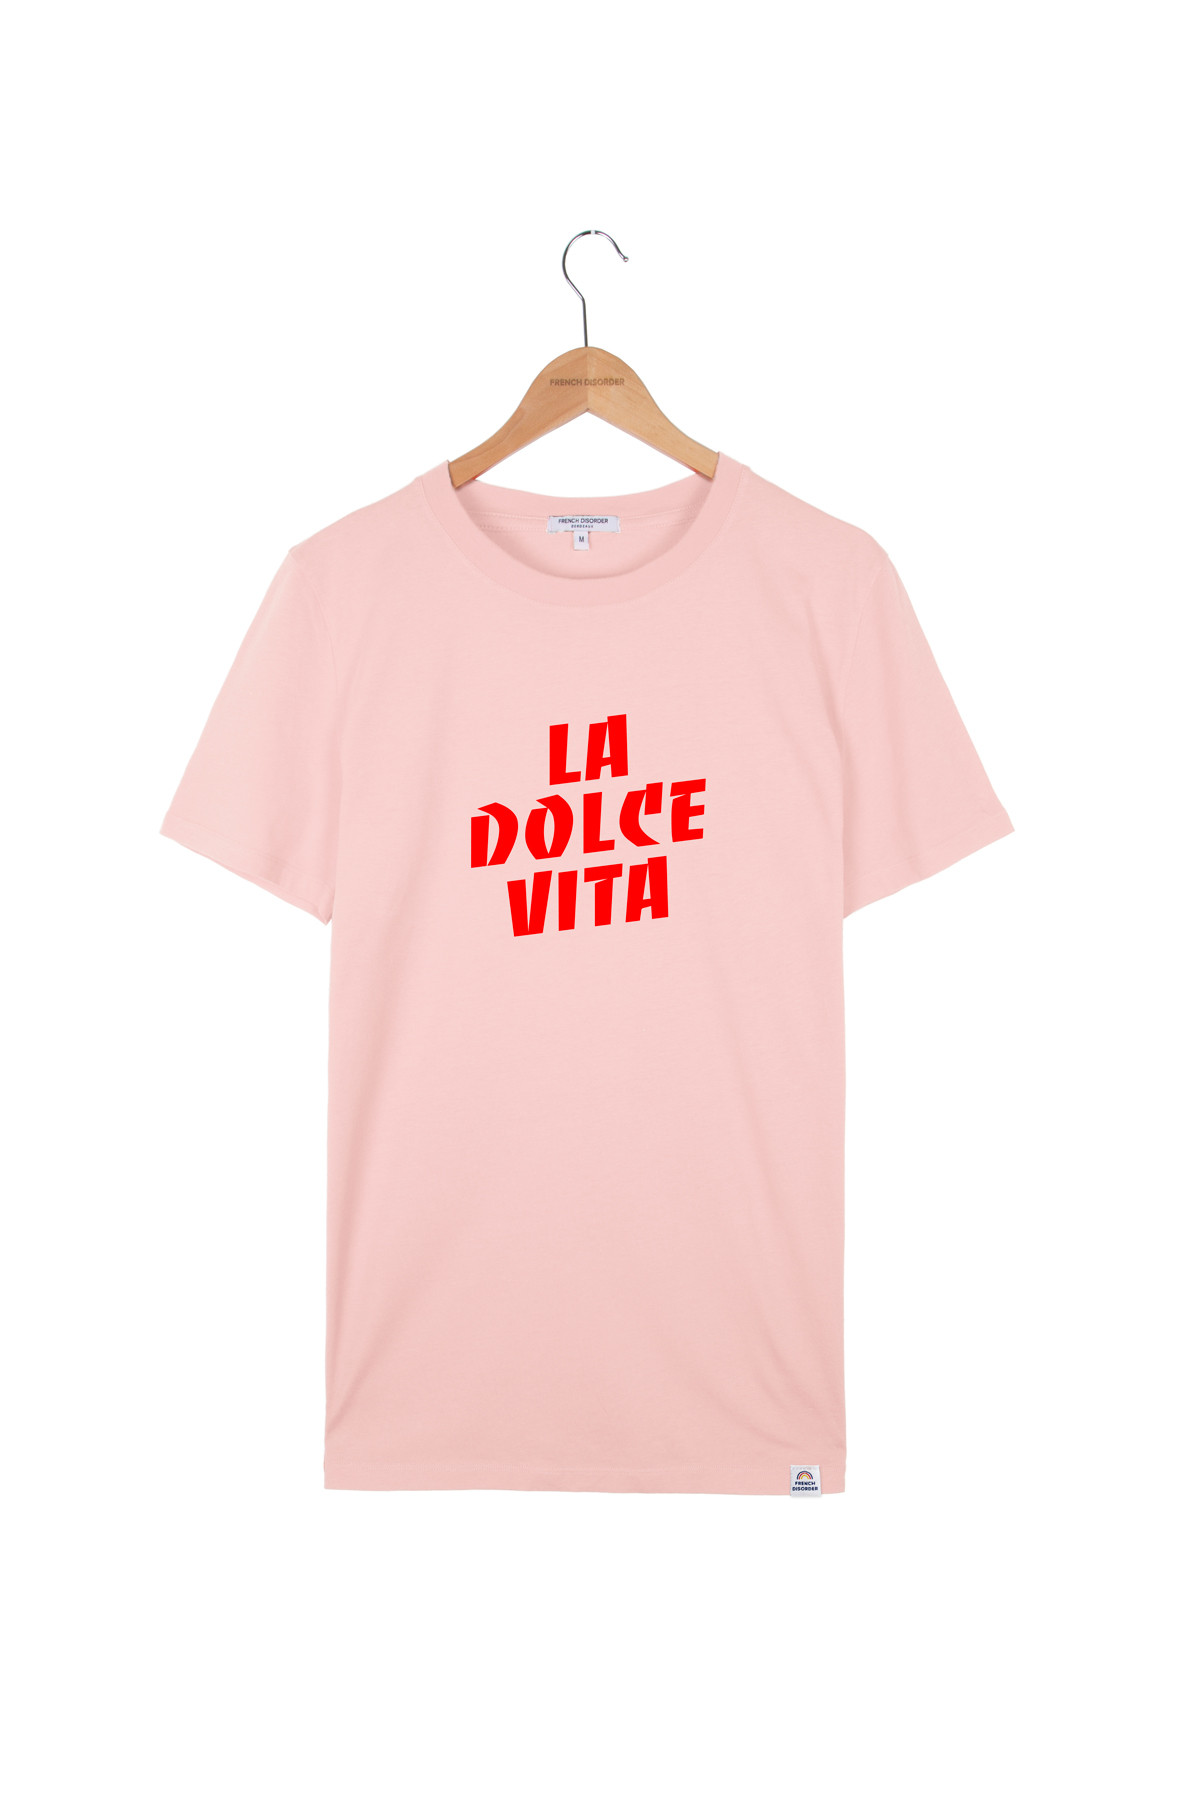 tee-shirt femme Dolce Vita - marcel et lily